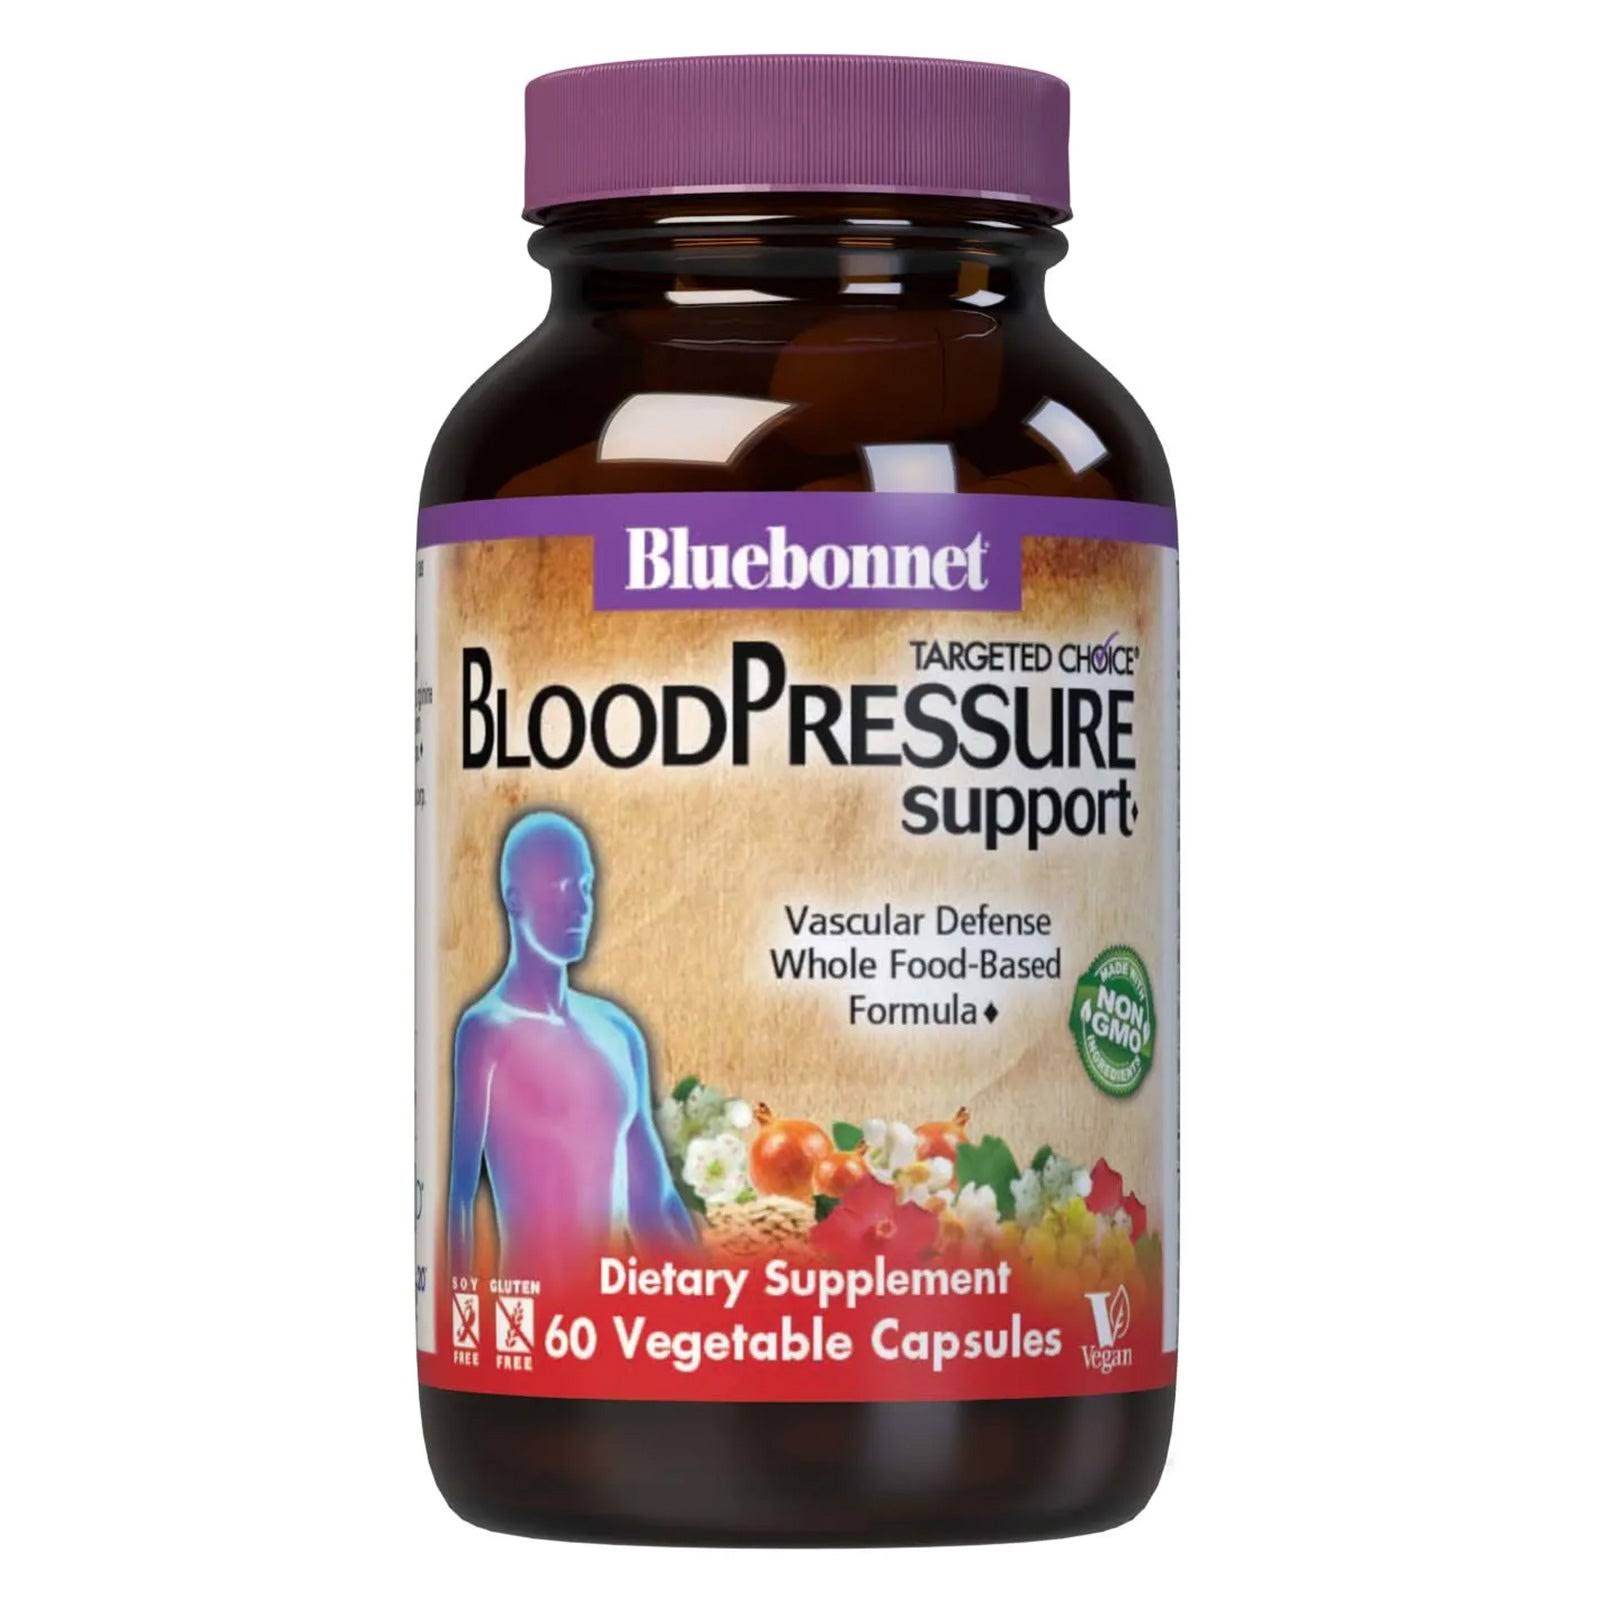 Bluebonnet Nutrition Blood Pressure Support Vascular Defense Dietary Supplement - 60ct